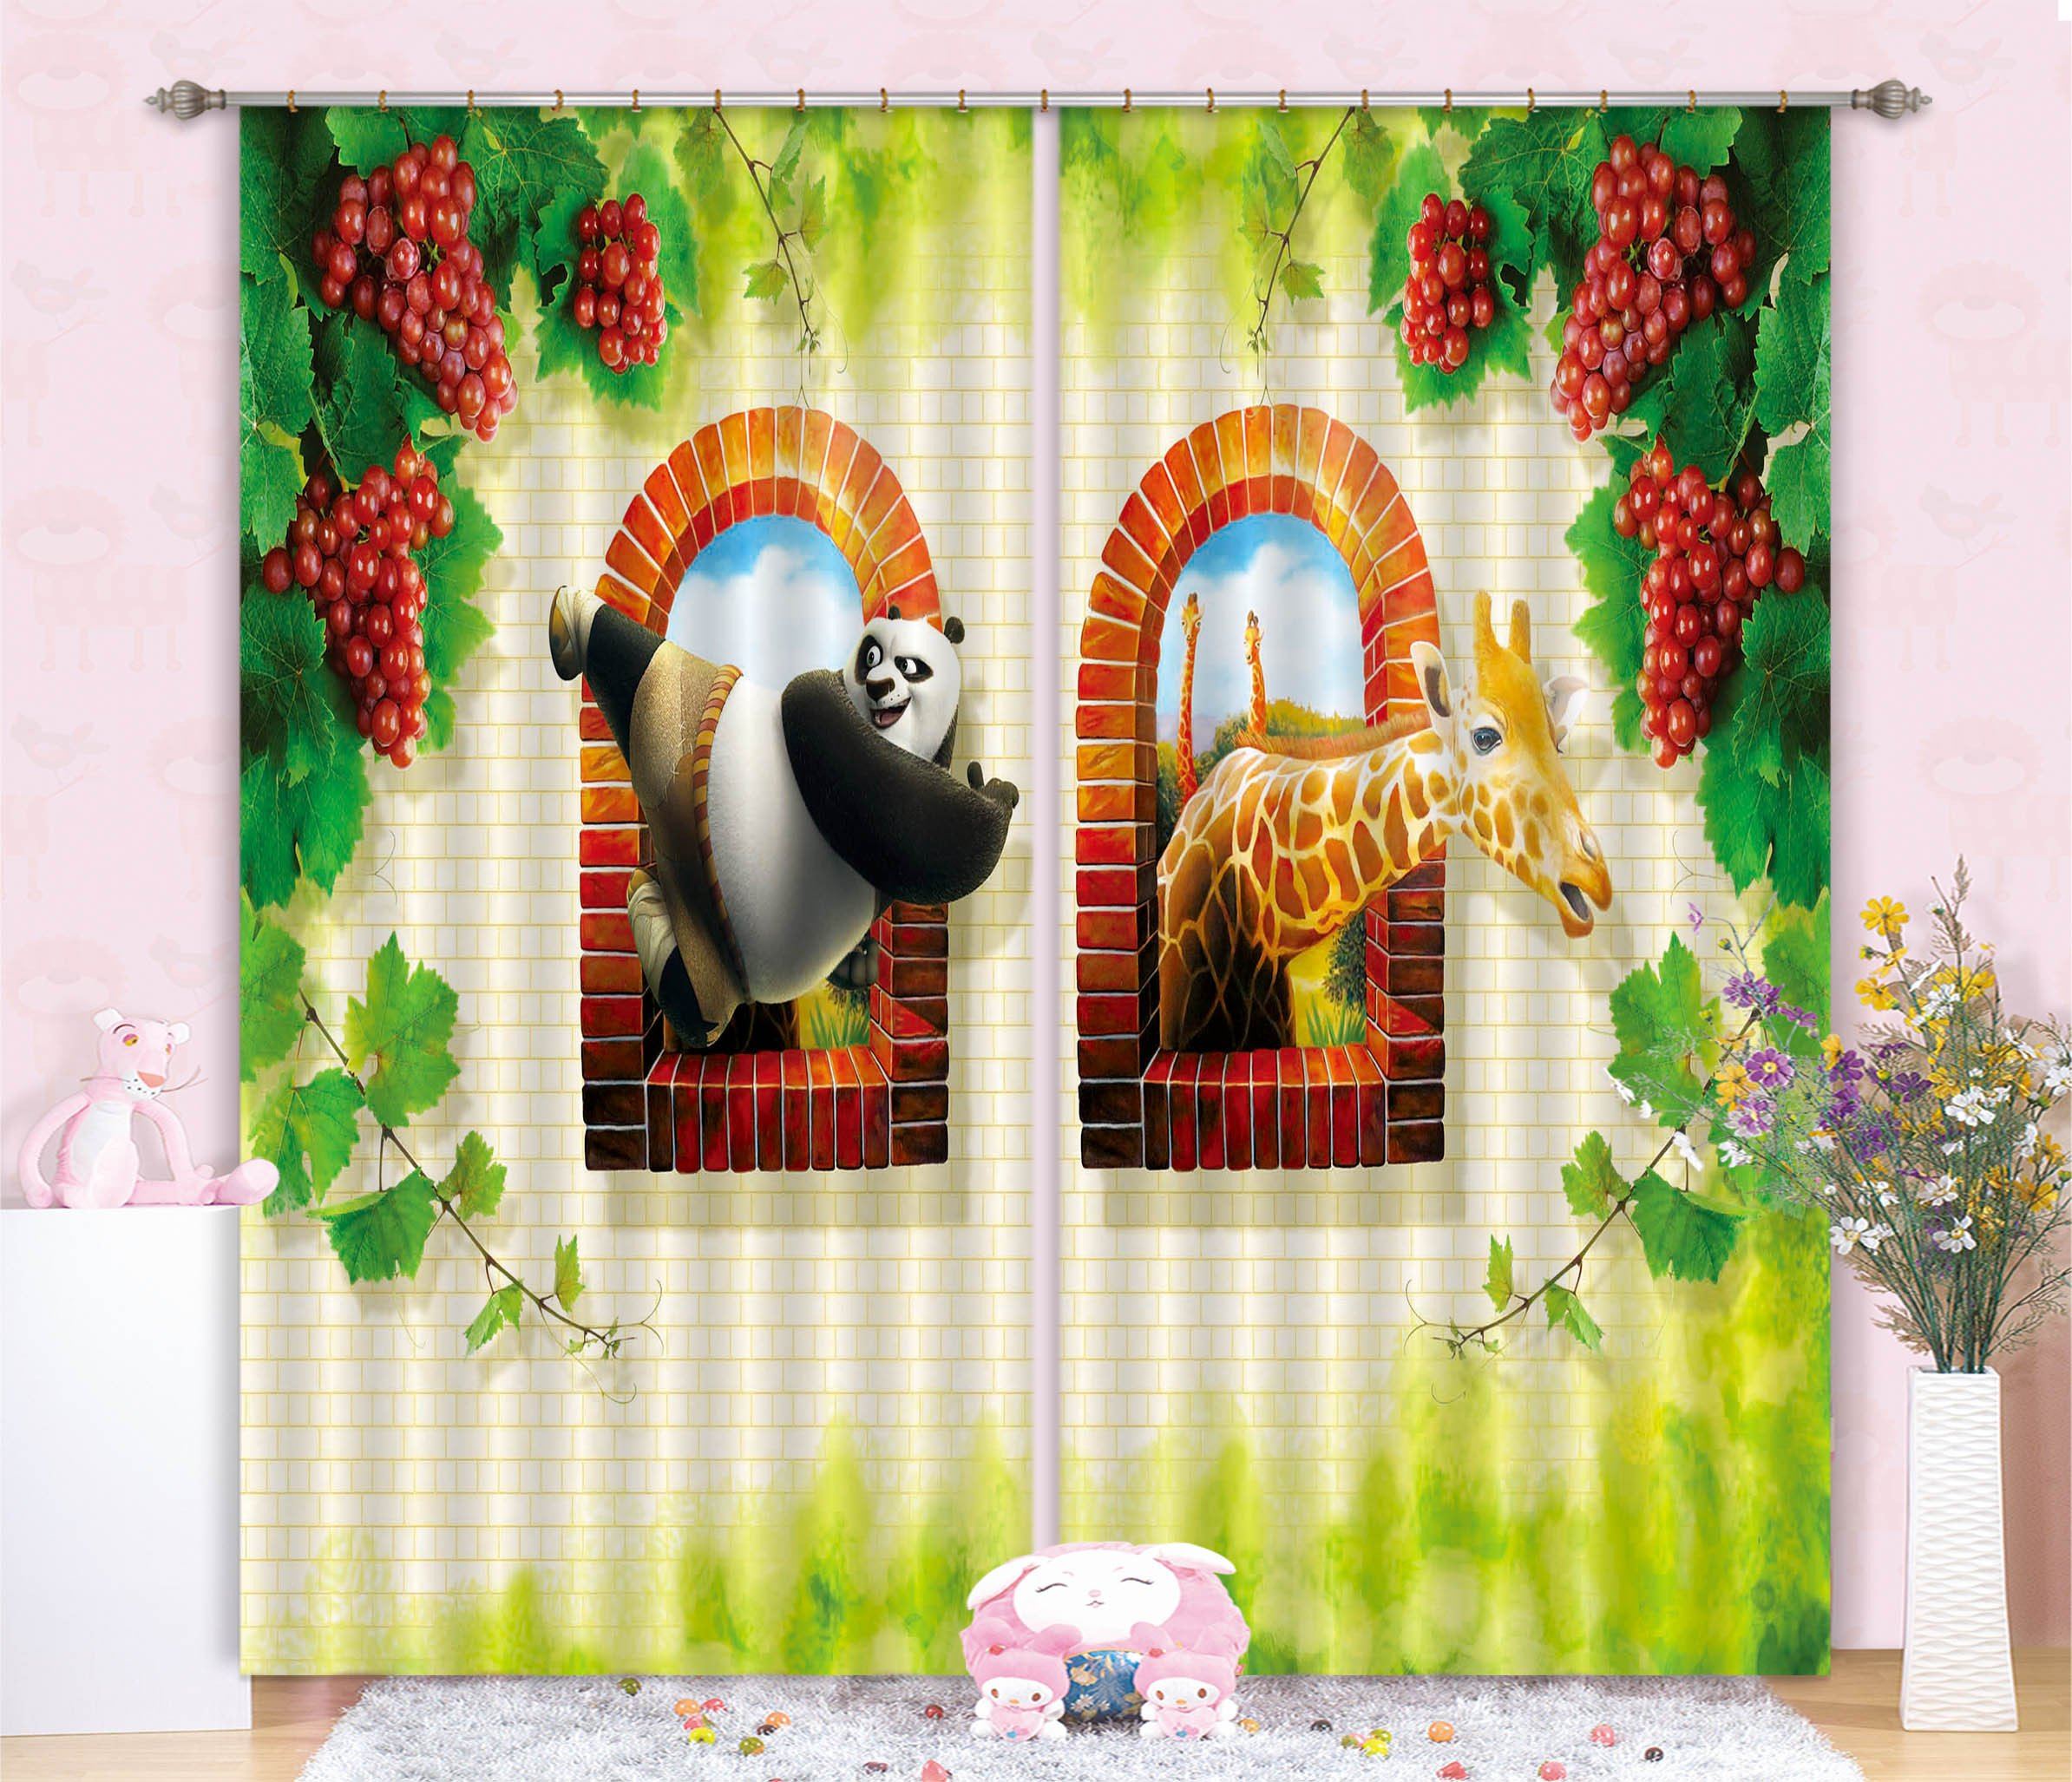 3D Kung Fu Panda And Giraffes Curtains Drapes Wallpaper AJ Wallpaper 